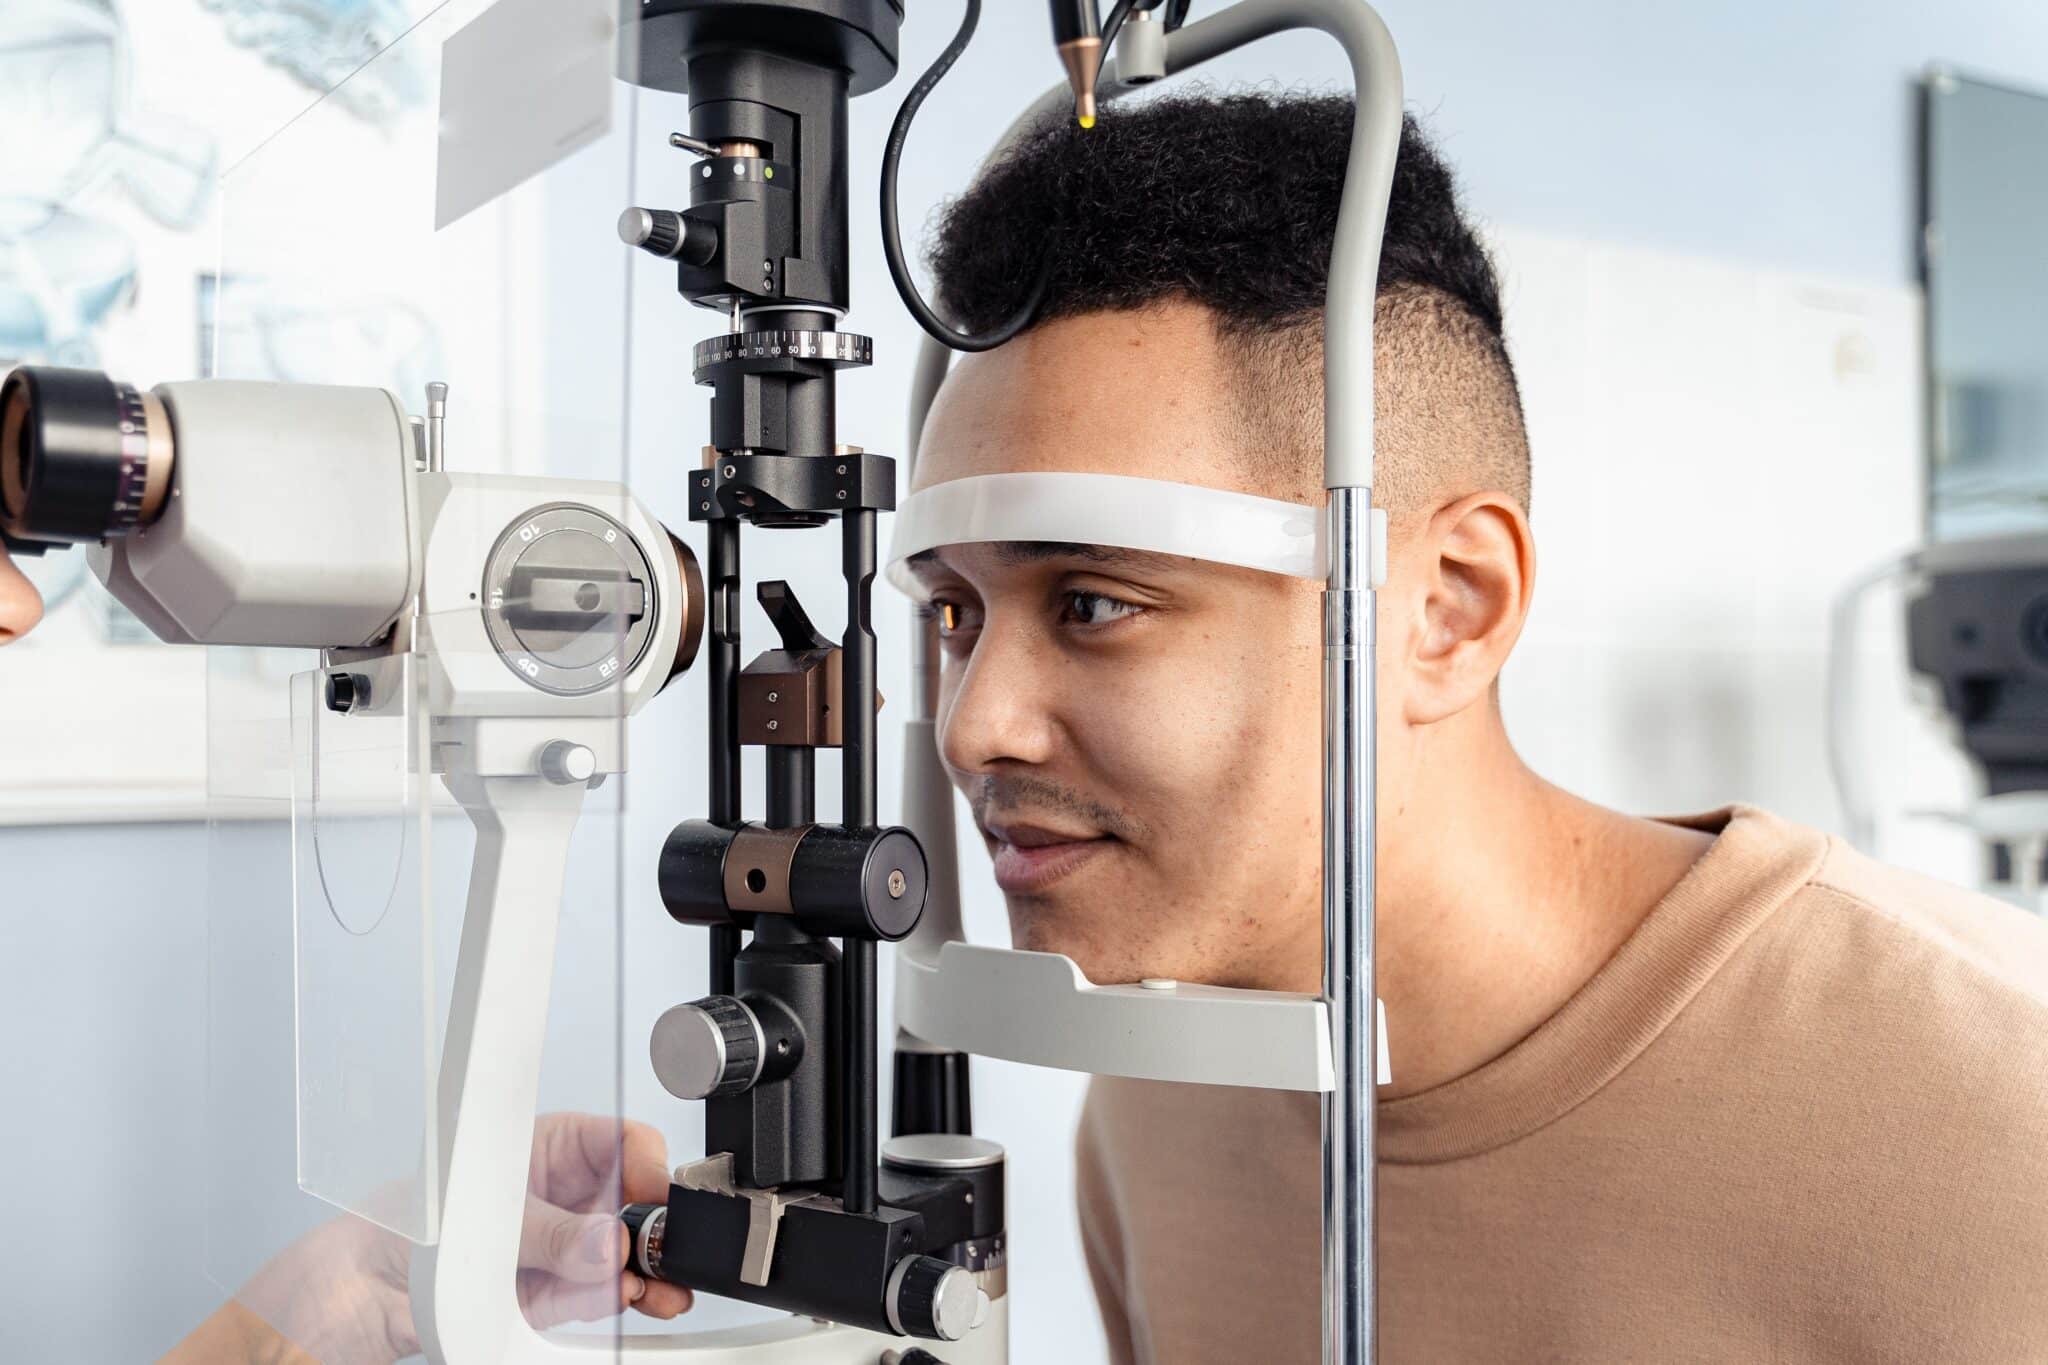 Man receiving an eye exam.